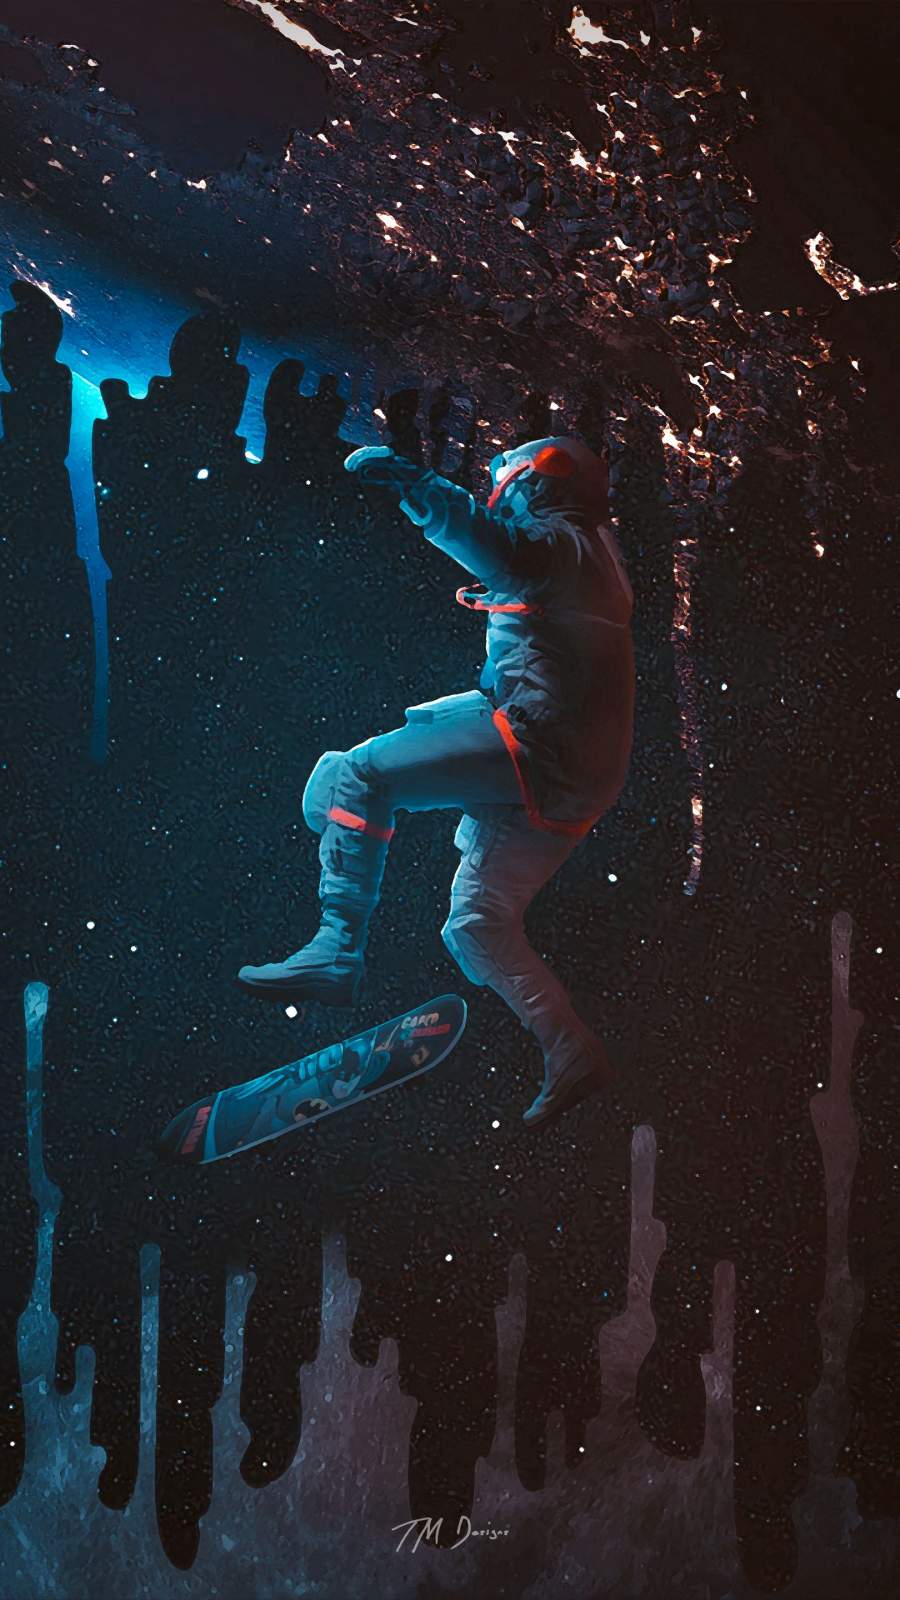 A person on skateboard in space - Skate, skater